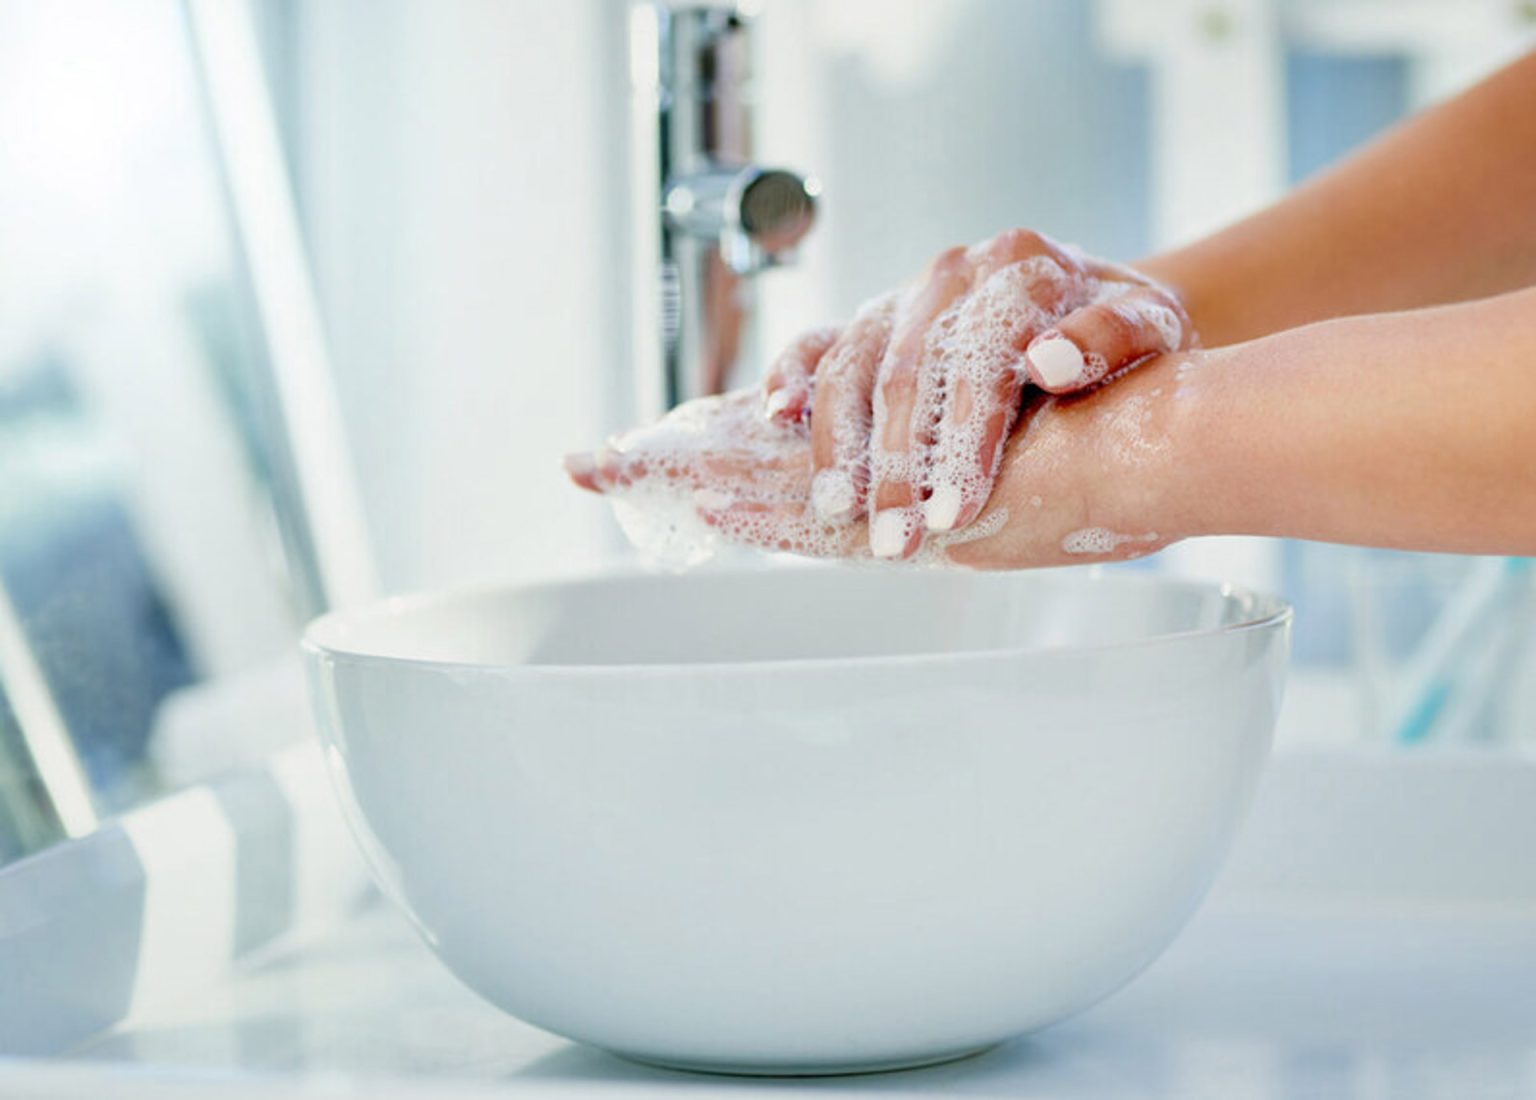 моет руки